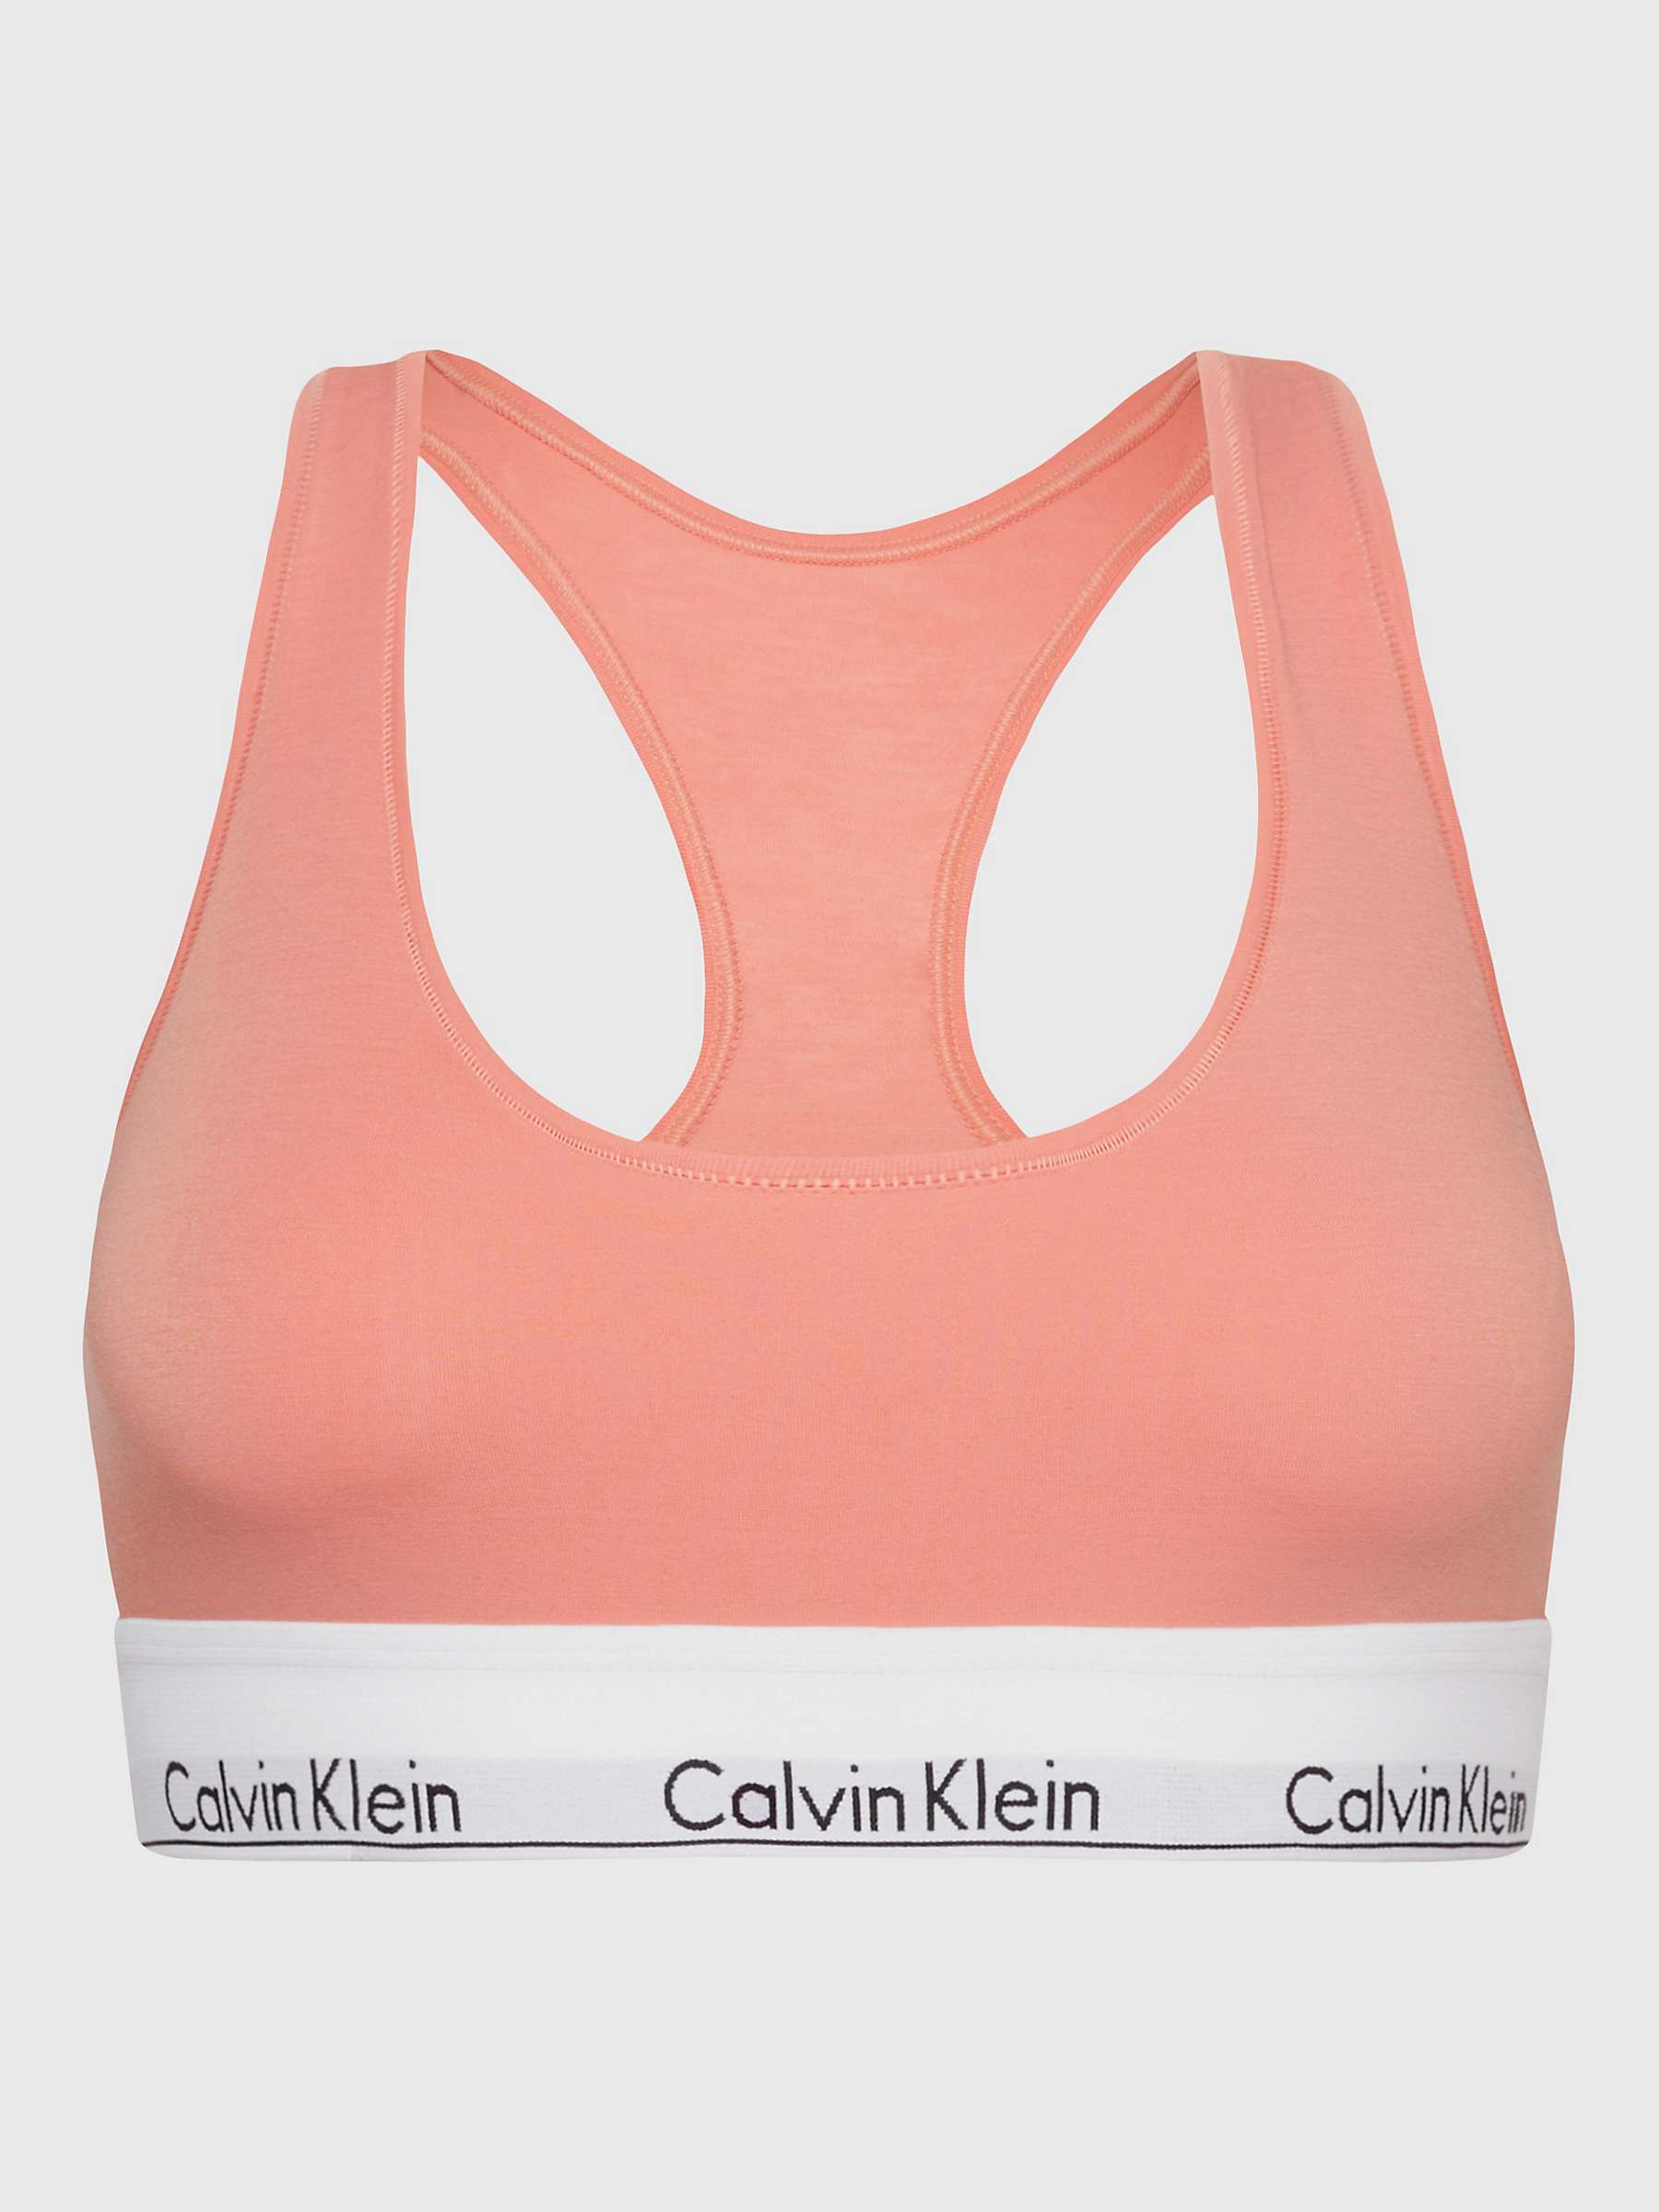 Buy Calvin Klein Unlined Bralette Online at johnlewis.com